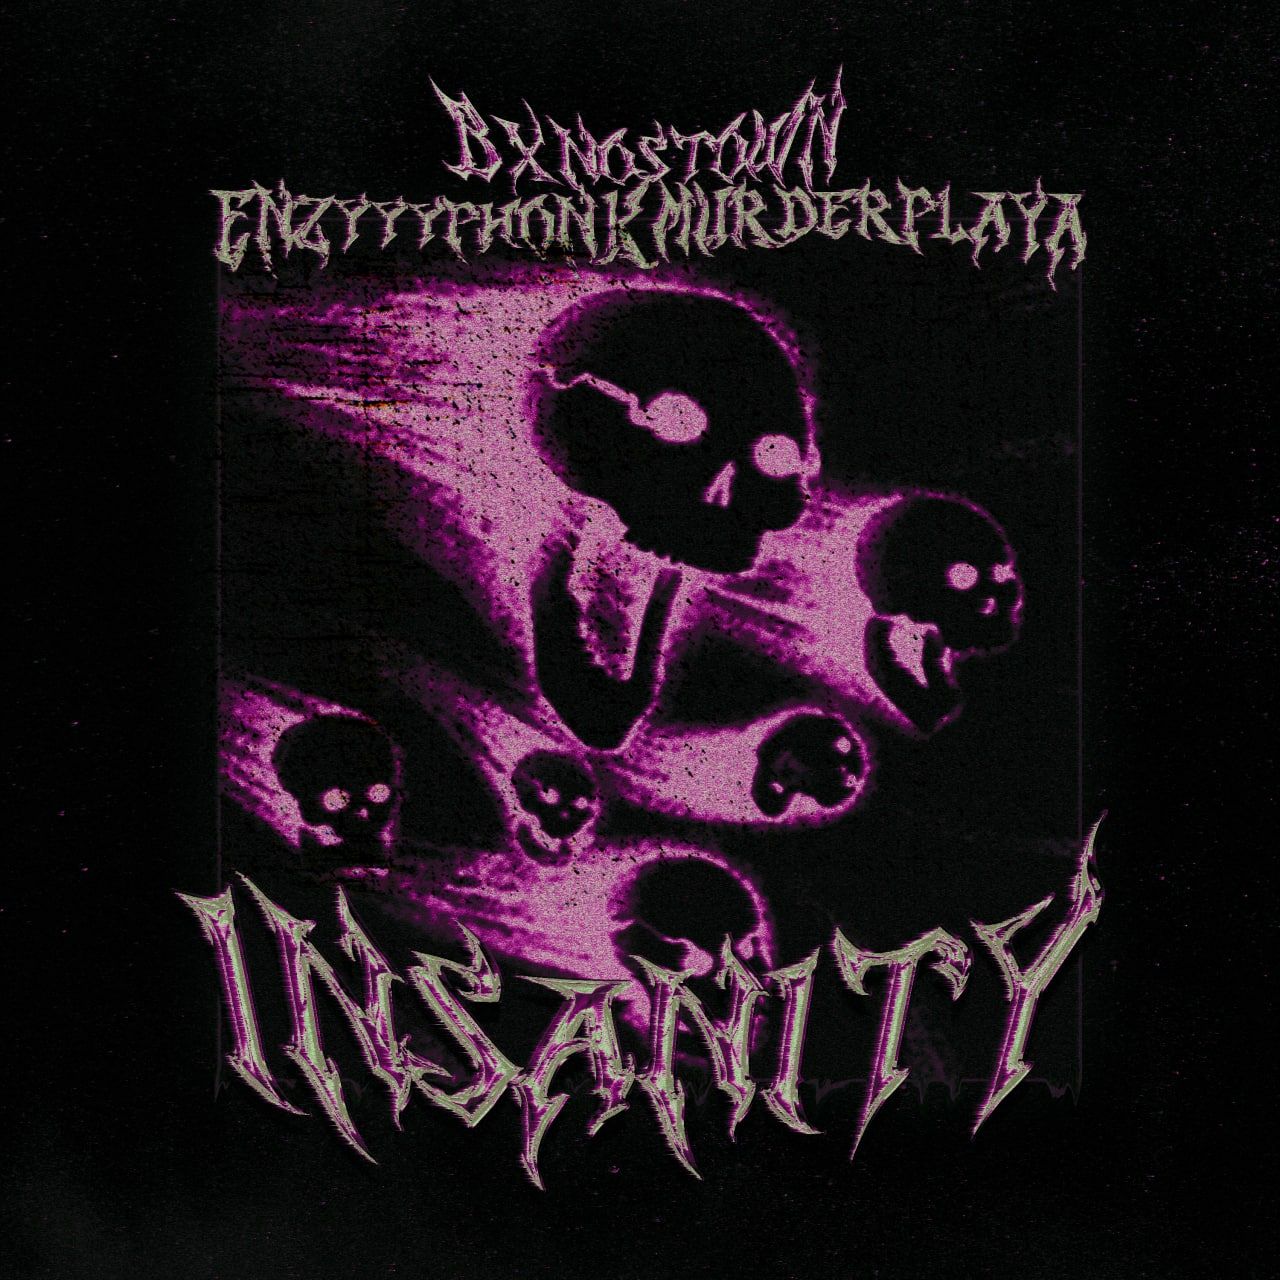 Descargar Insanity-BXNOSTOWN & ENZYYYPHONK & MURDERPLAYA